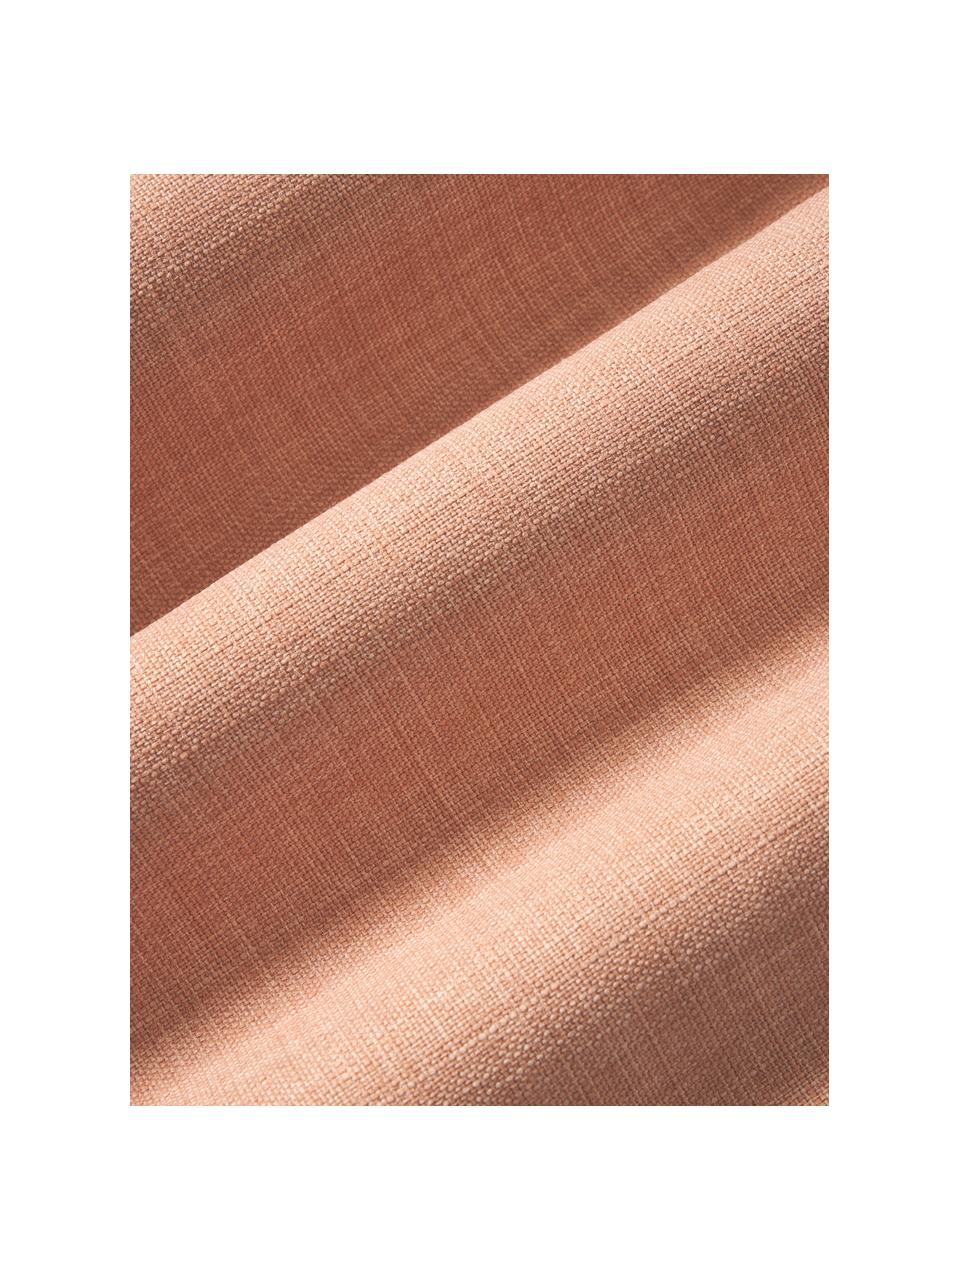 Kissenhülle Cressida mit zweifarbiger Kederumrandung, 100 % Polyester, Rosa, B 45 x L 45 cm